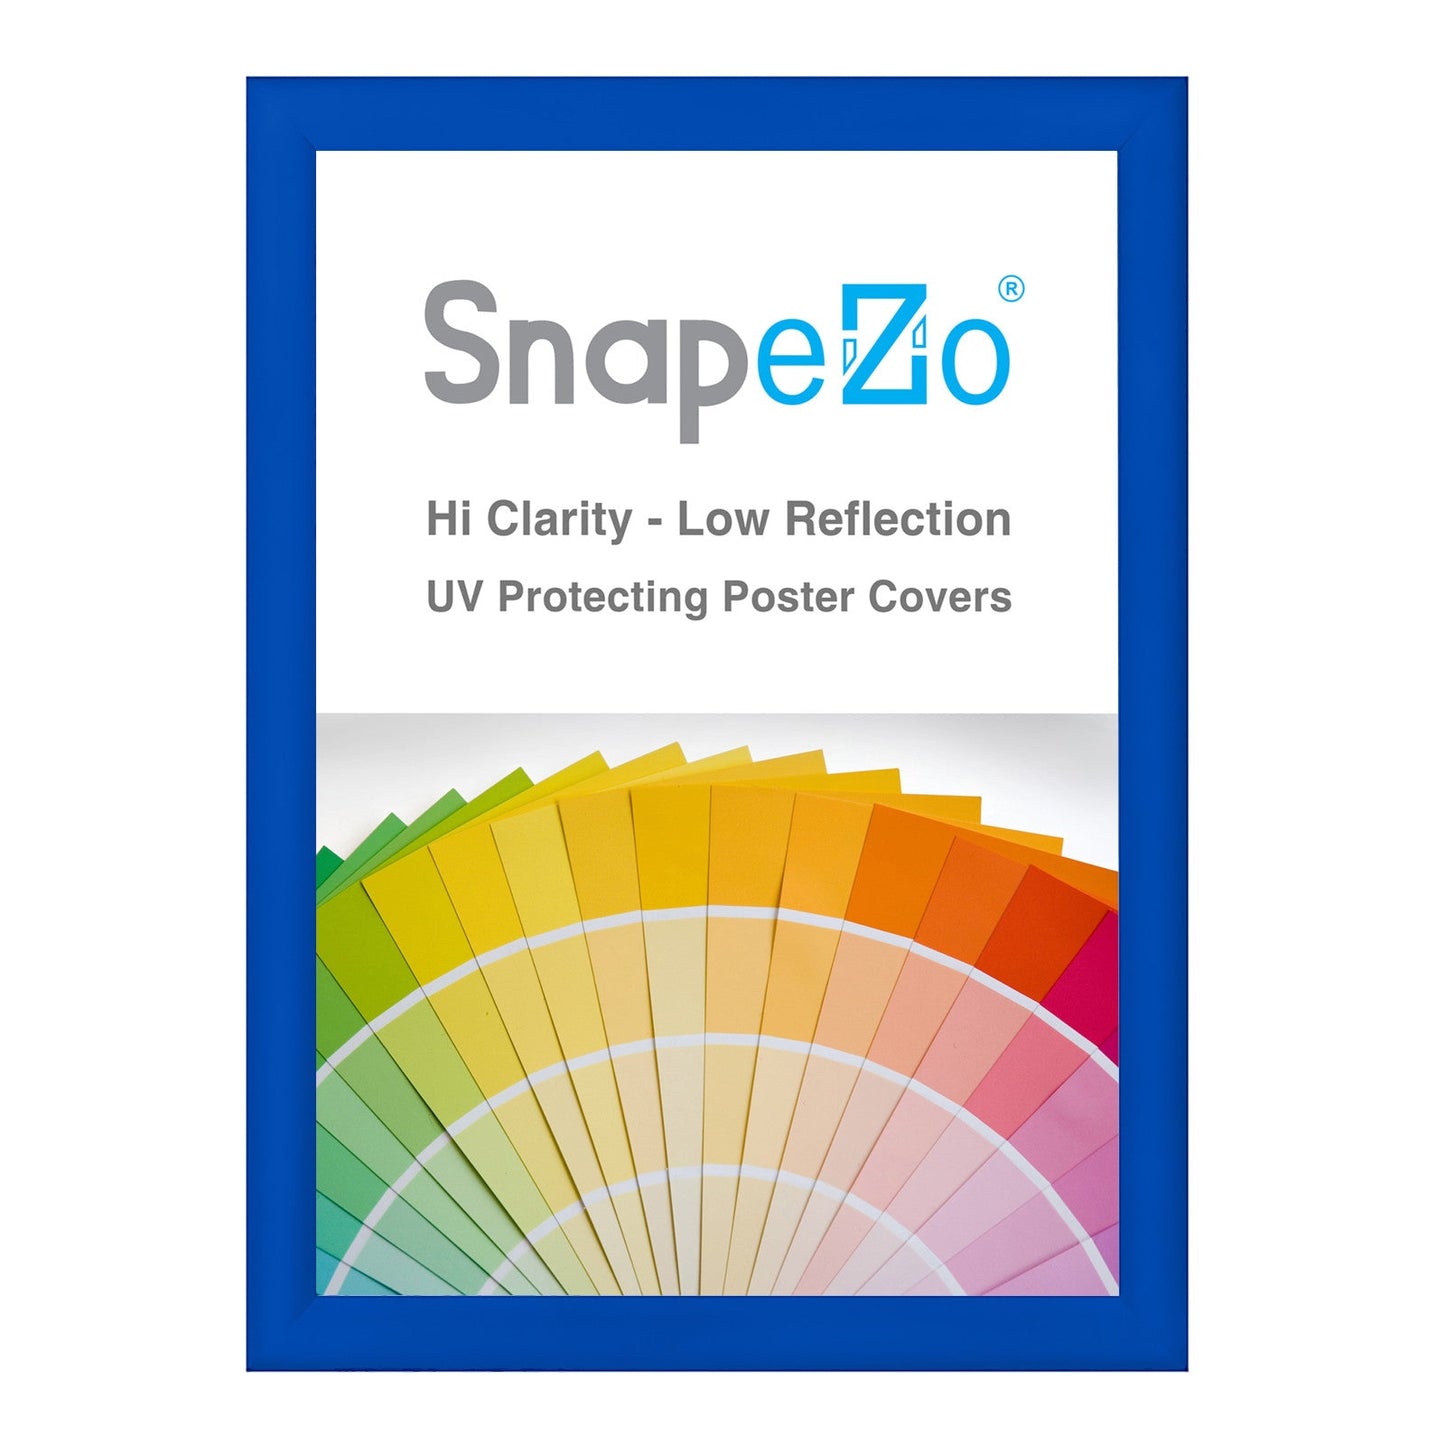 28x40 Blue SnapeZo® Snap Frame - 1.2" Profile